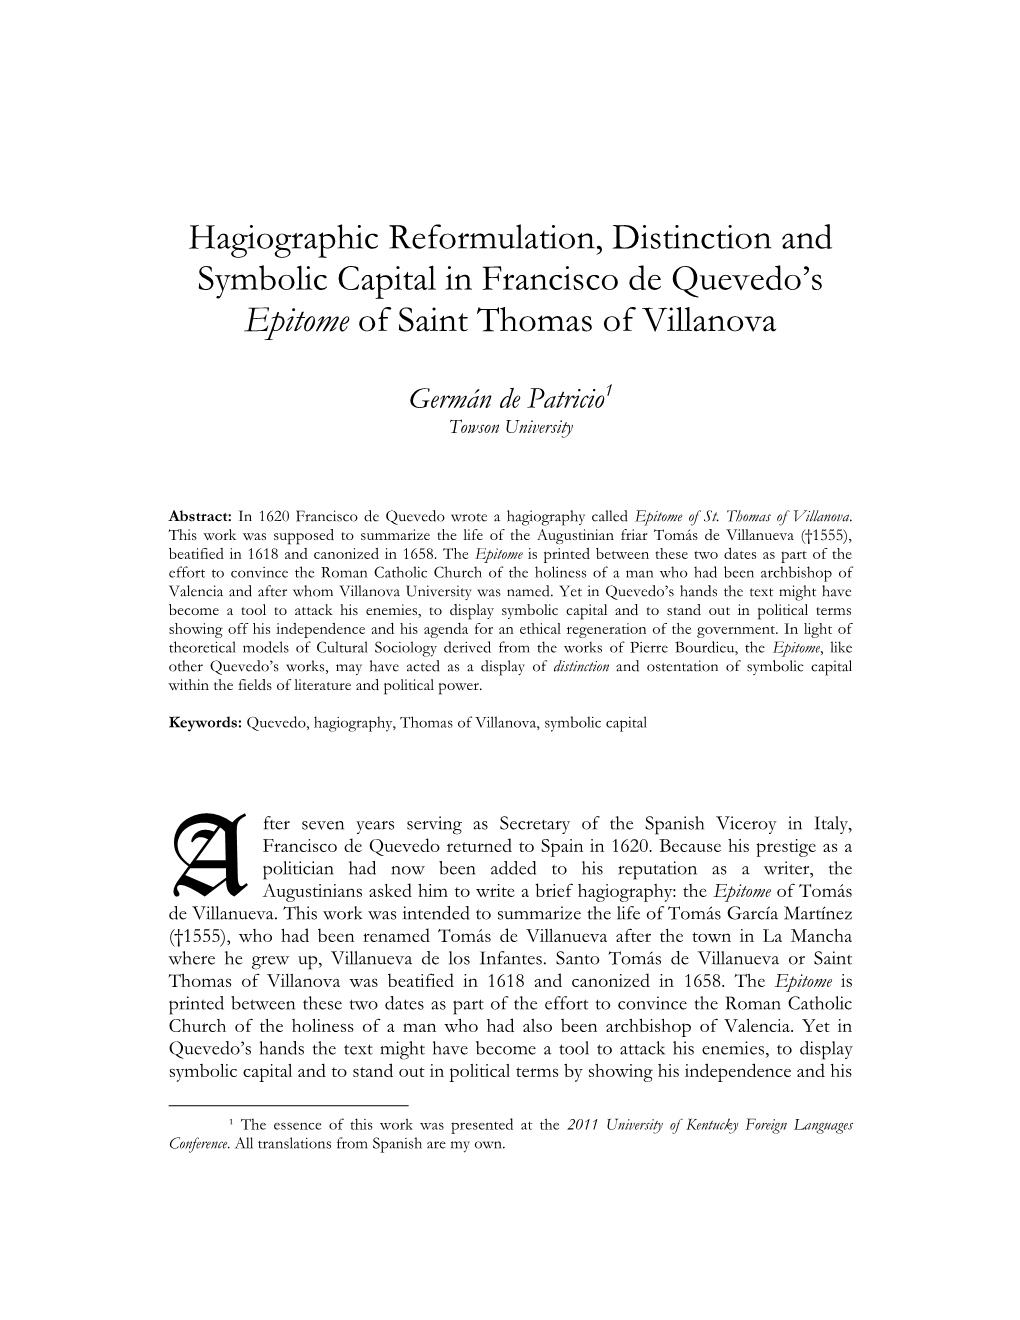 Hagiographic Reformulation, Distinction and Symbolic Capital in Francisco De Quevedo's Epitome of Saint Thomas of Villanova